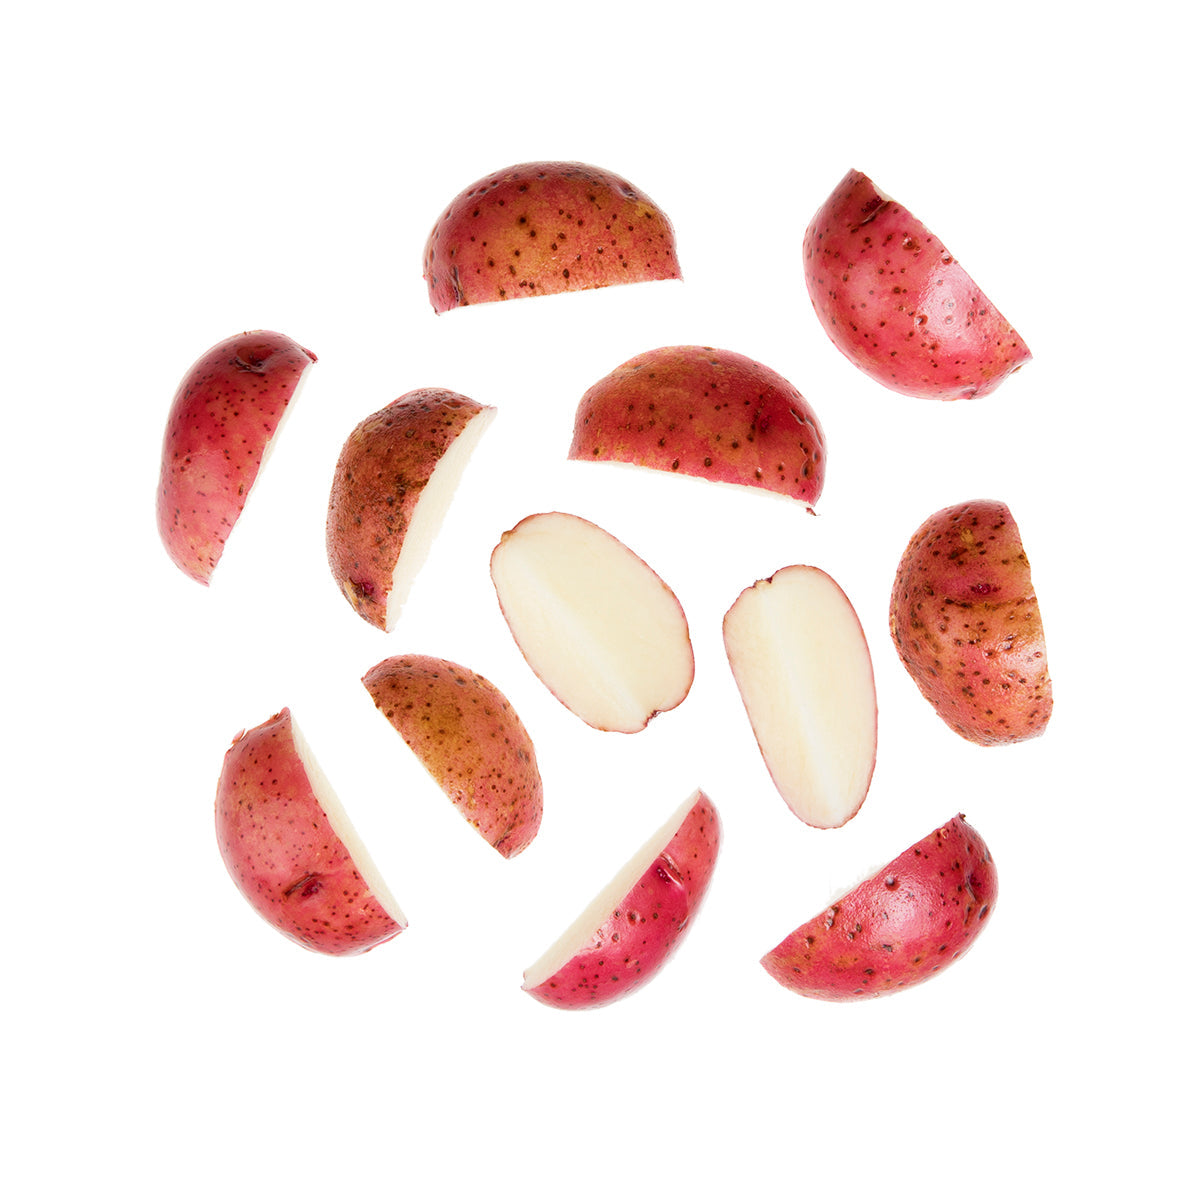 BoxNCase Red Potato Wedges